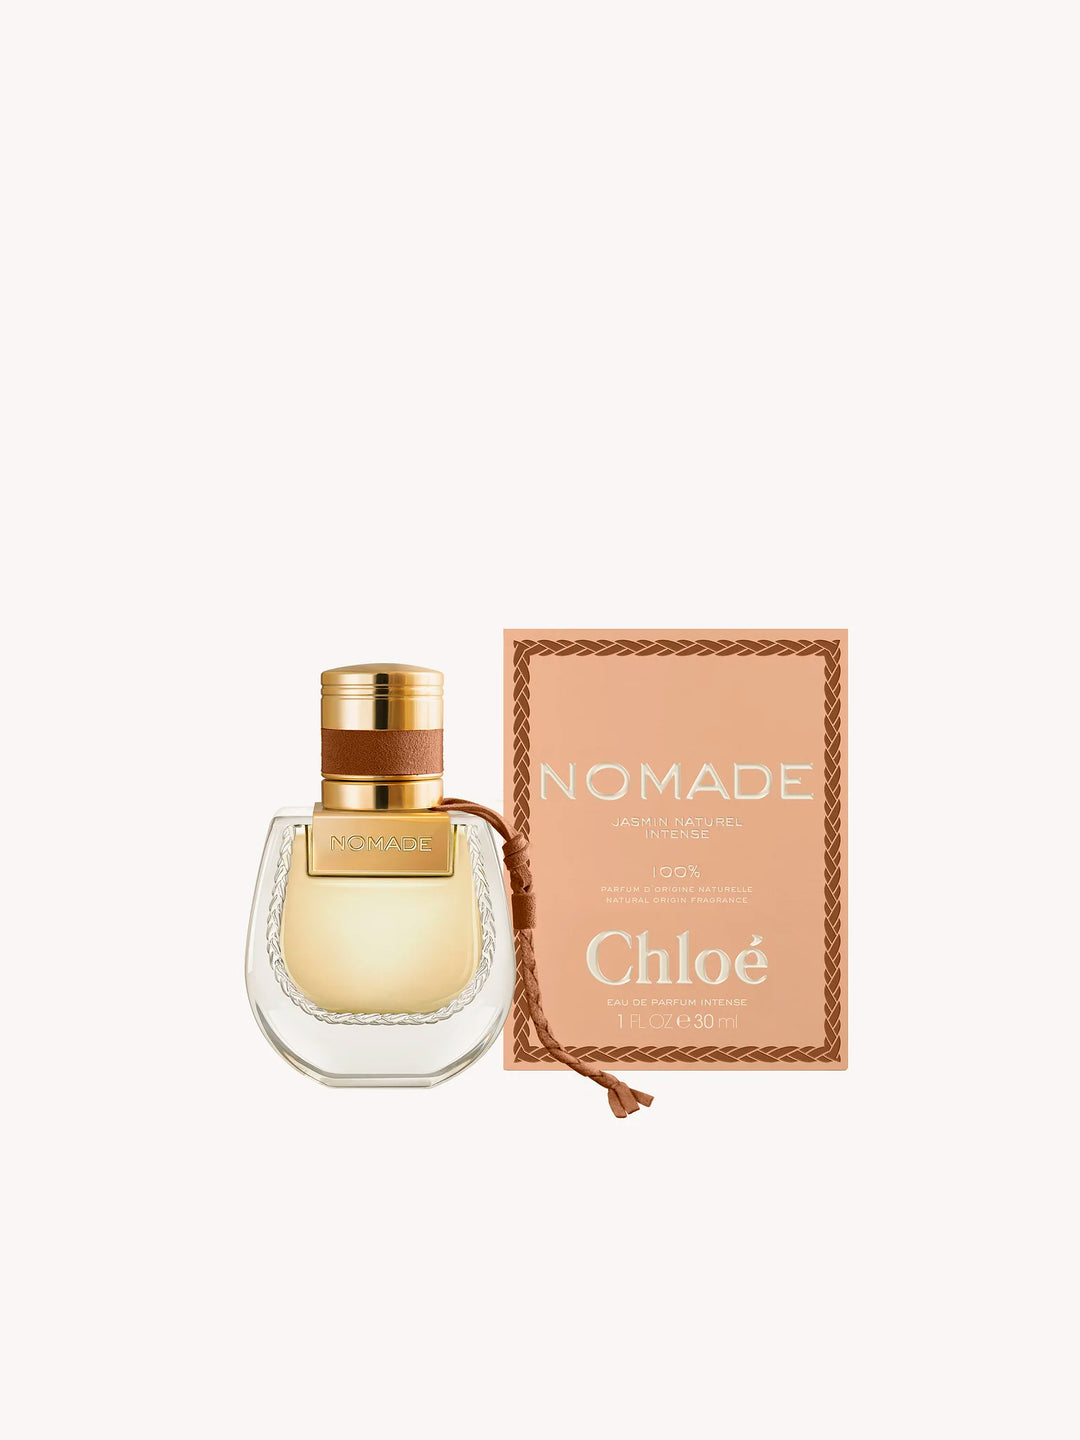 Chloe Nomade Jasmine Naturel Intense Eau De Parfum Spray 30ml